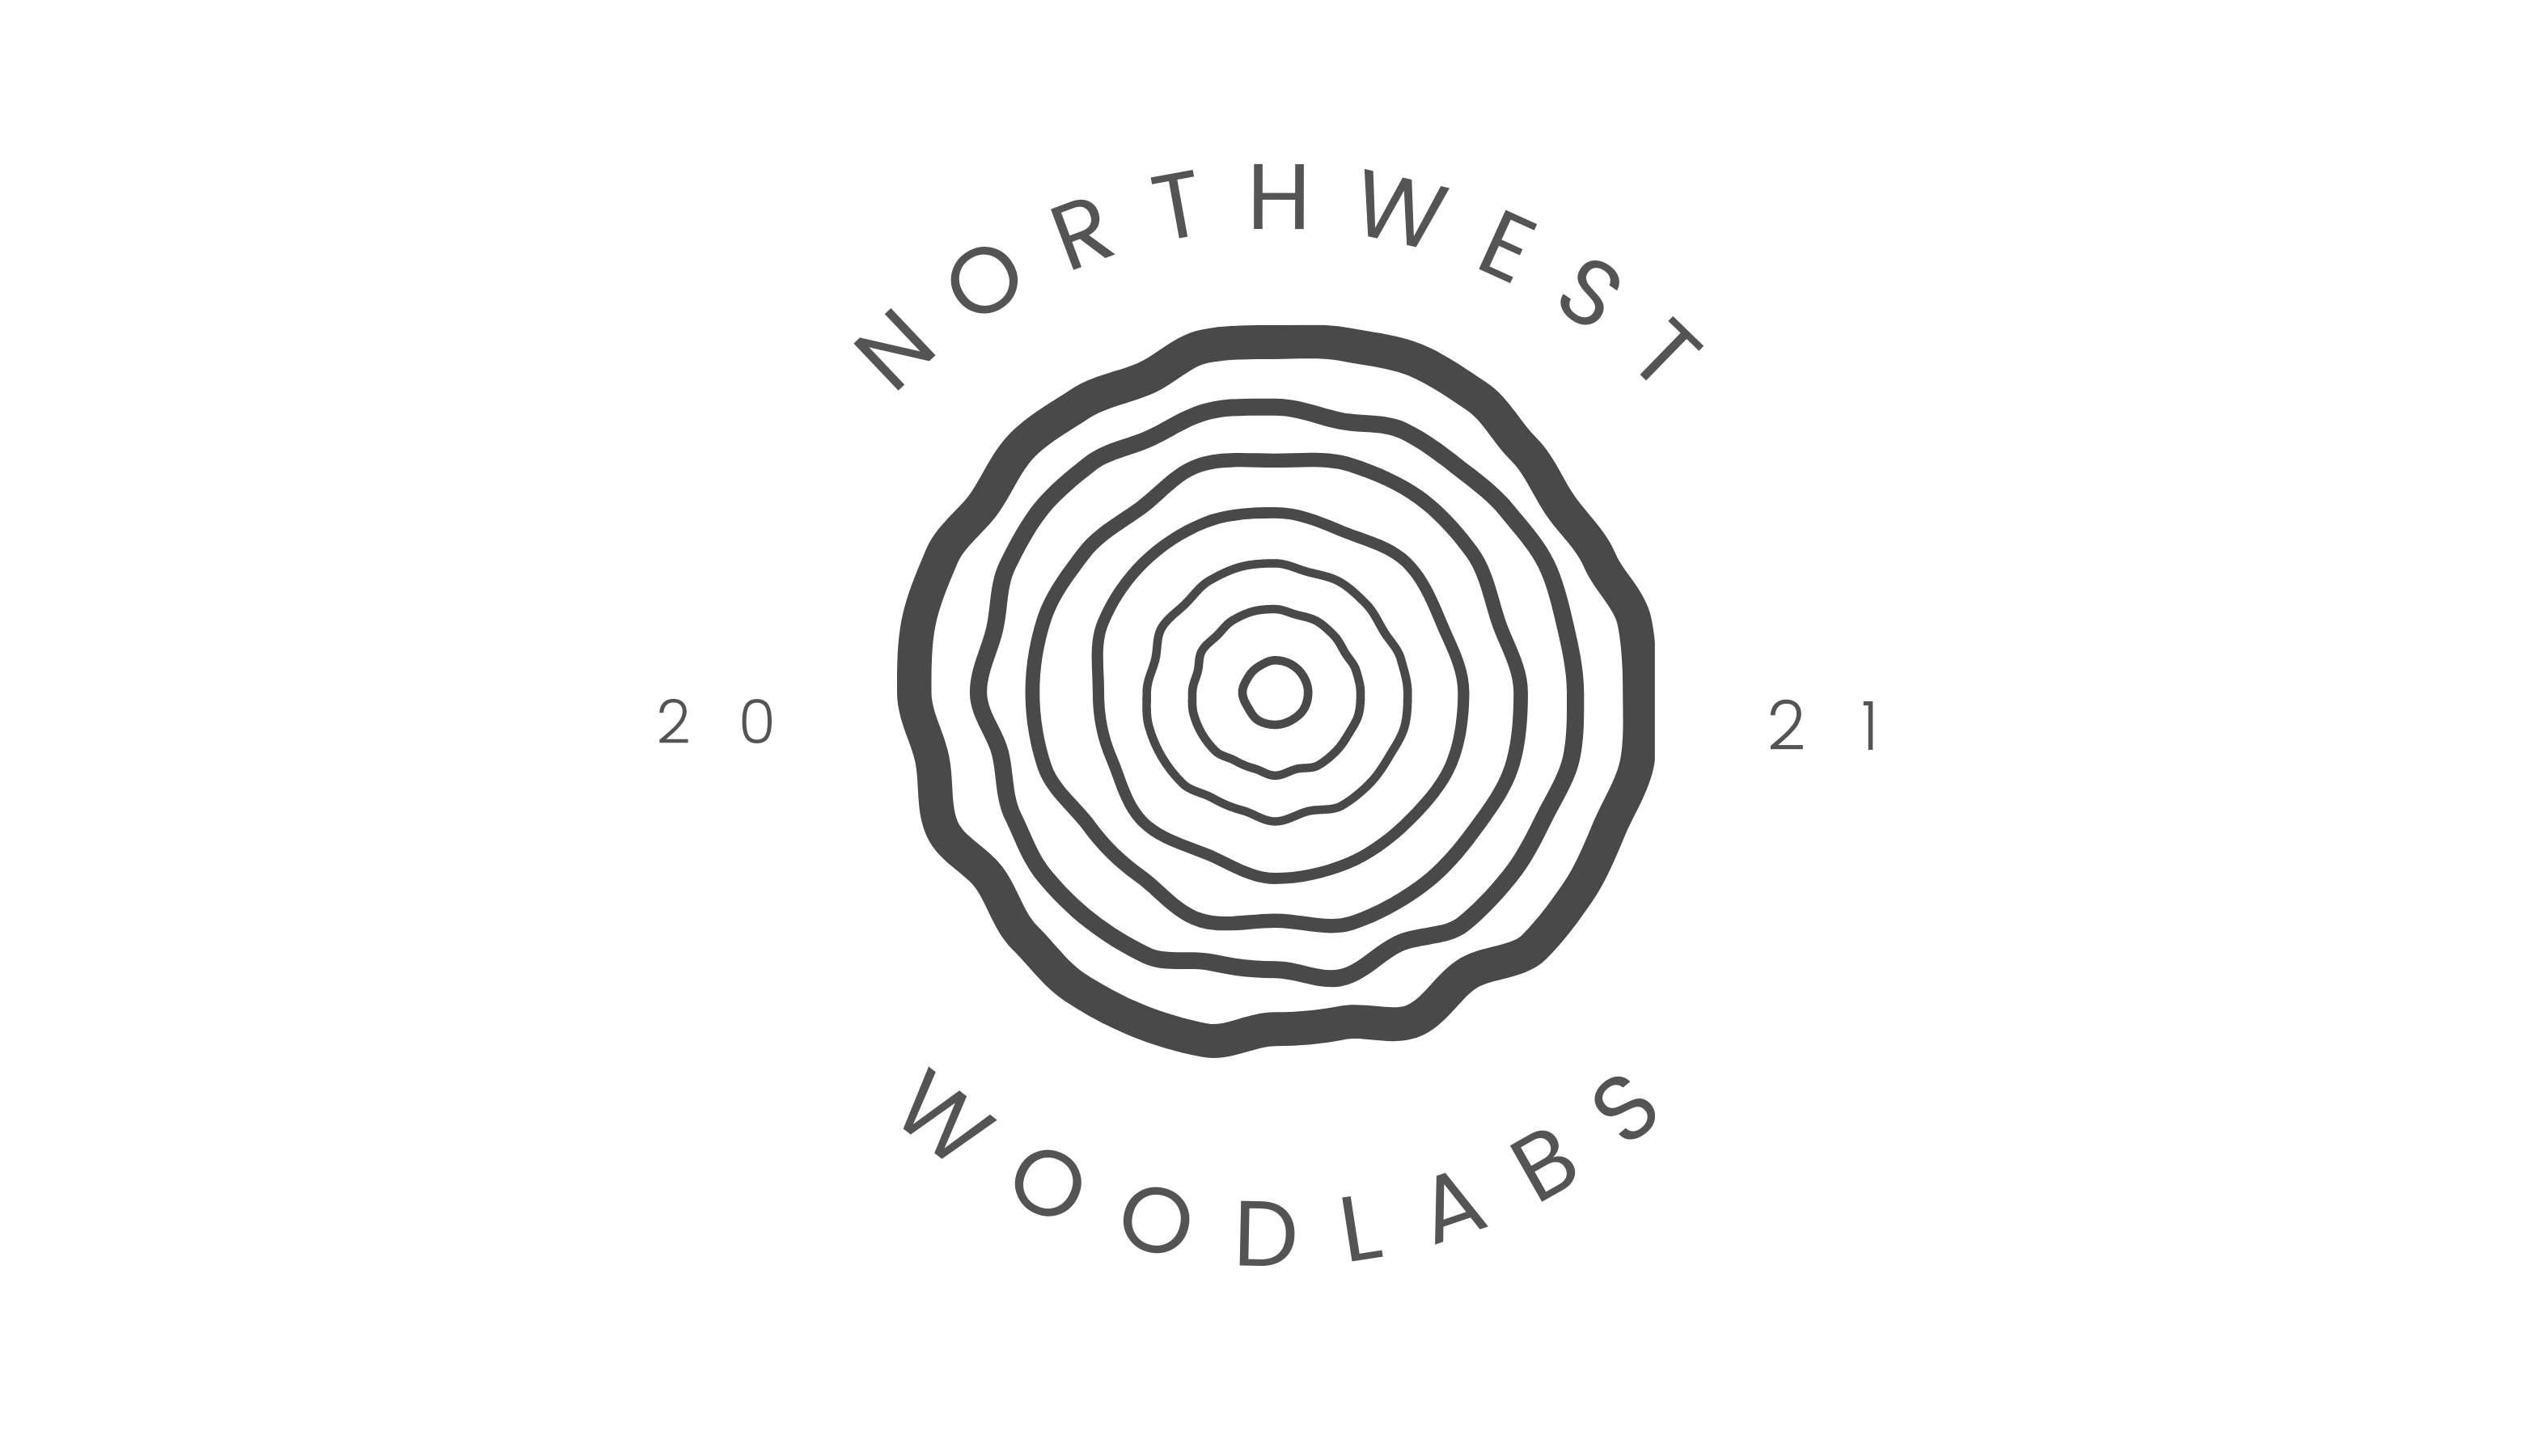 Northwest Woodlabs